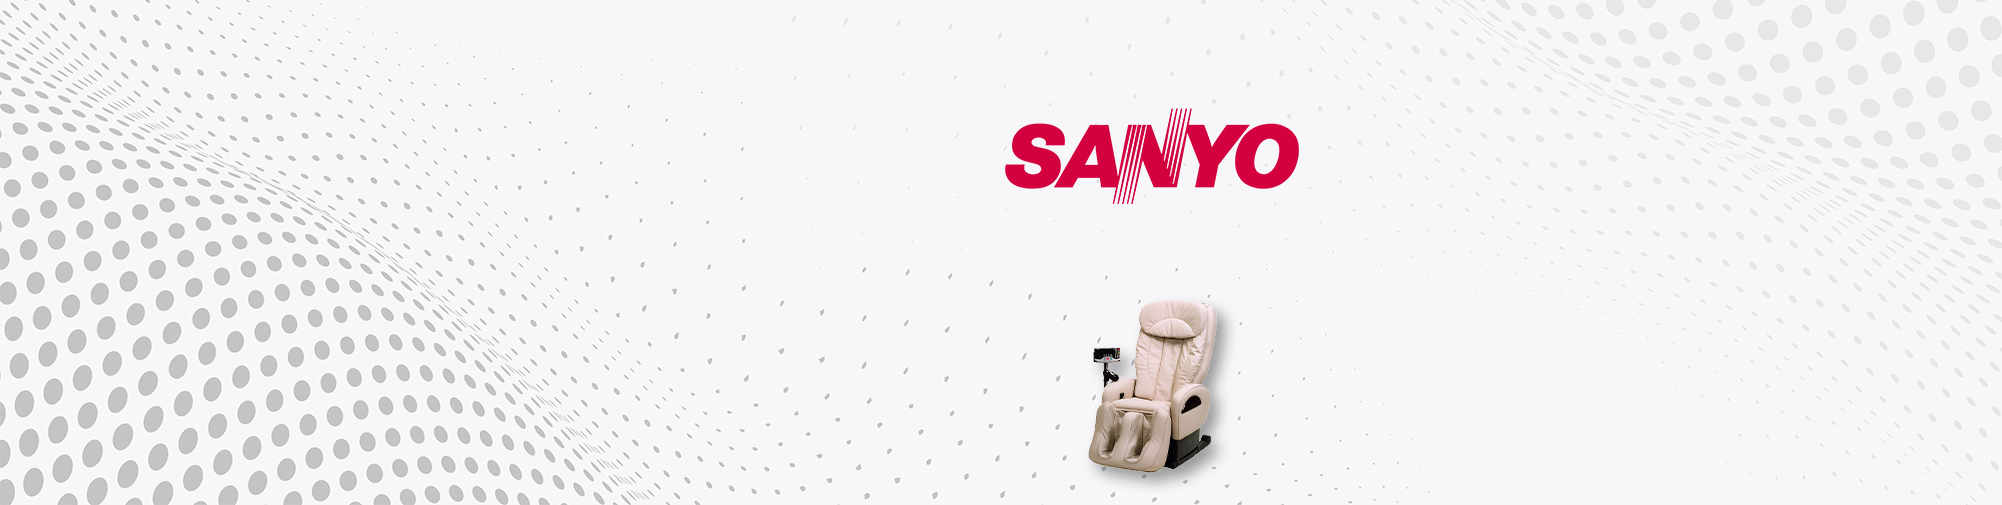 SANYO - companie japoneză de marcă | Massage Chair World